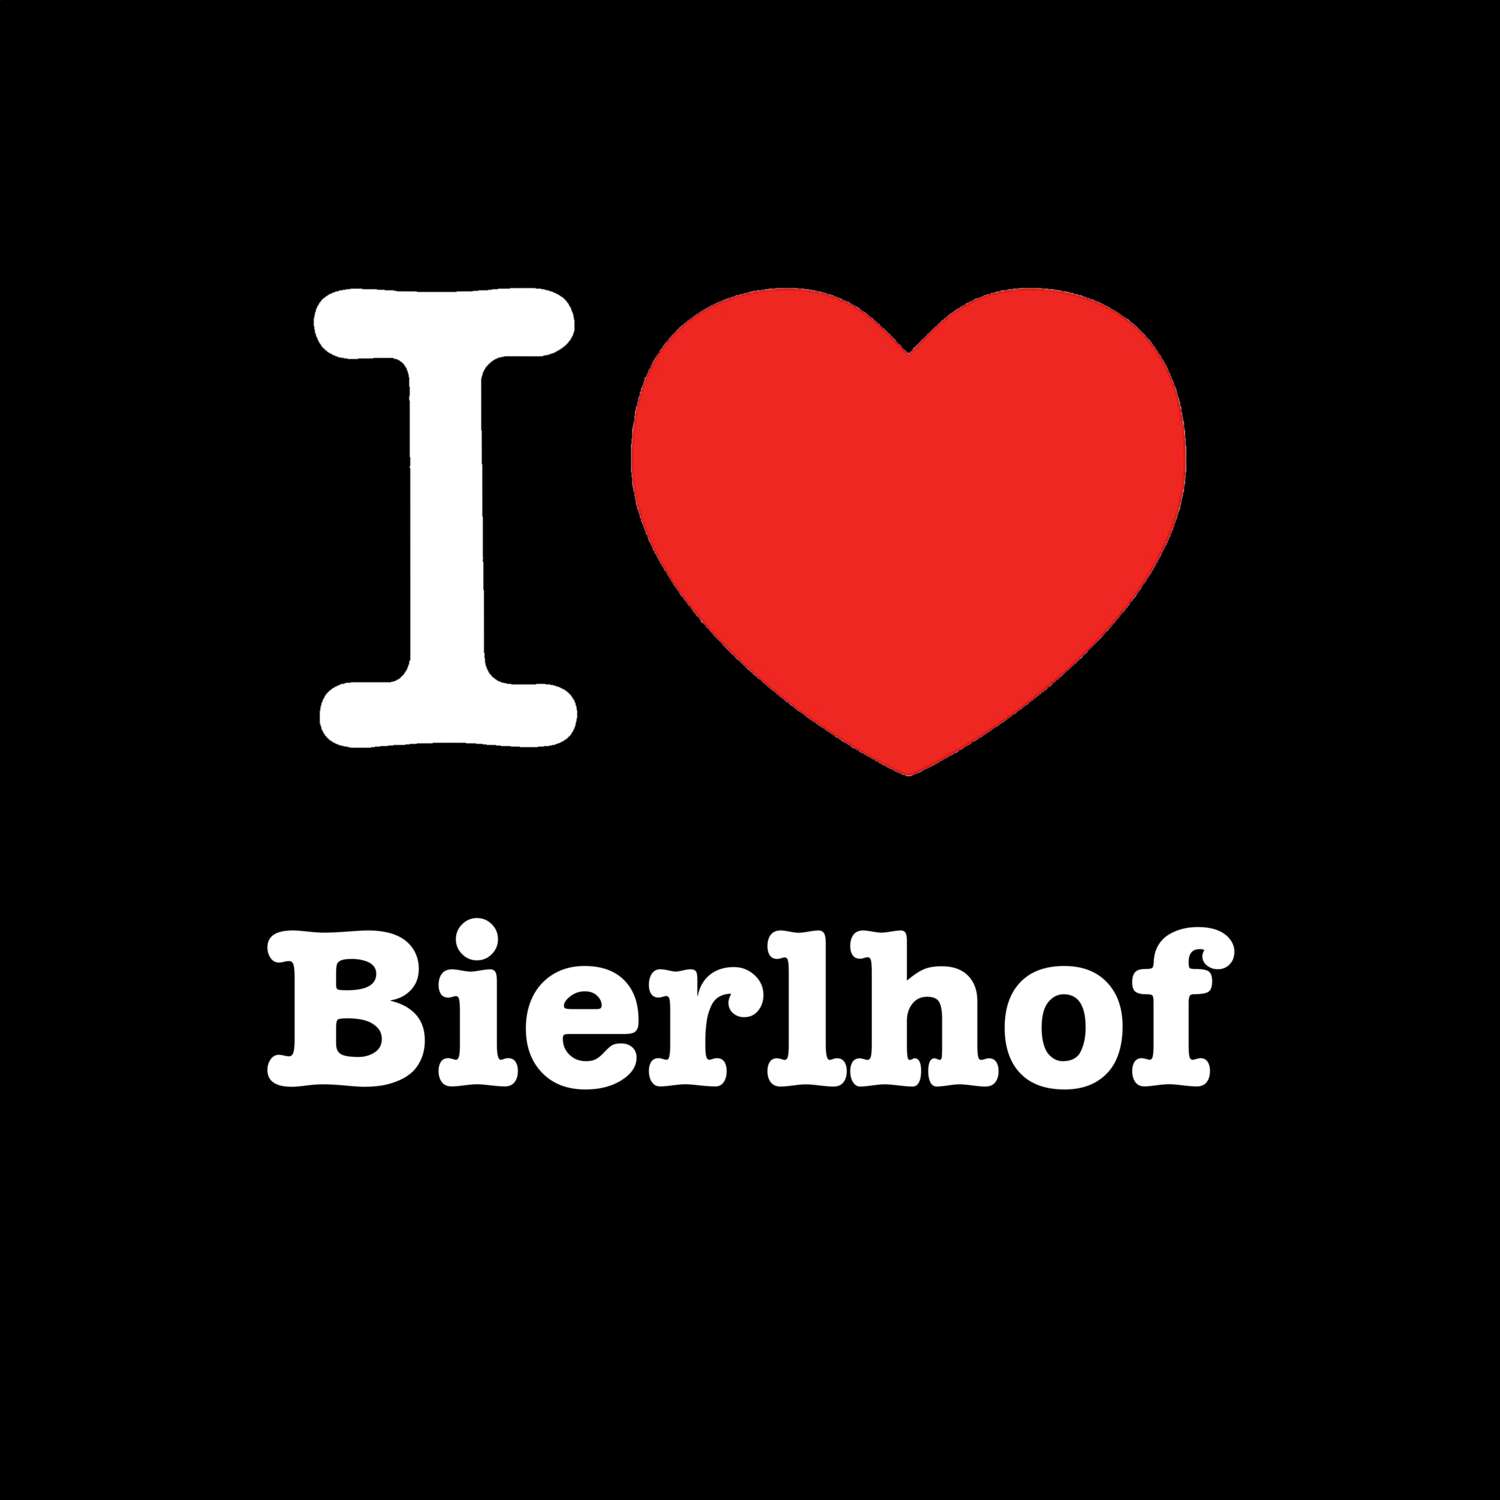 Bierlhof T-Shirt »I love«